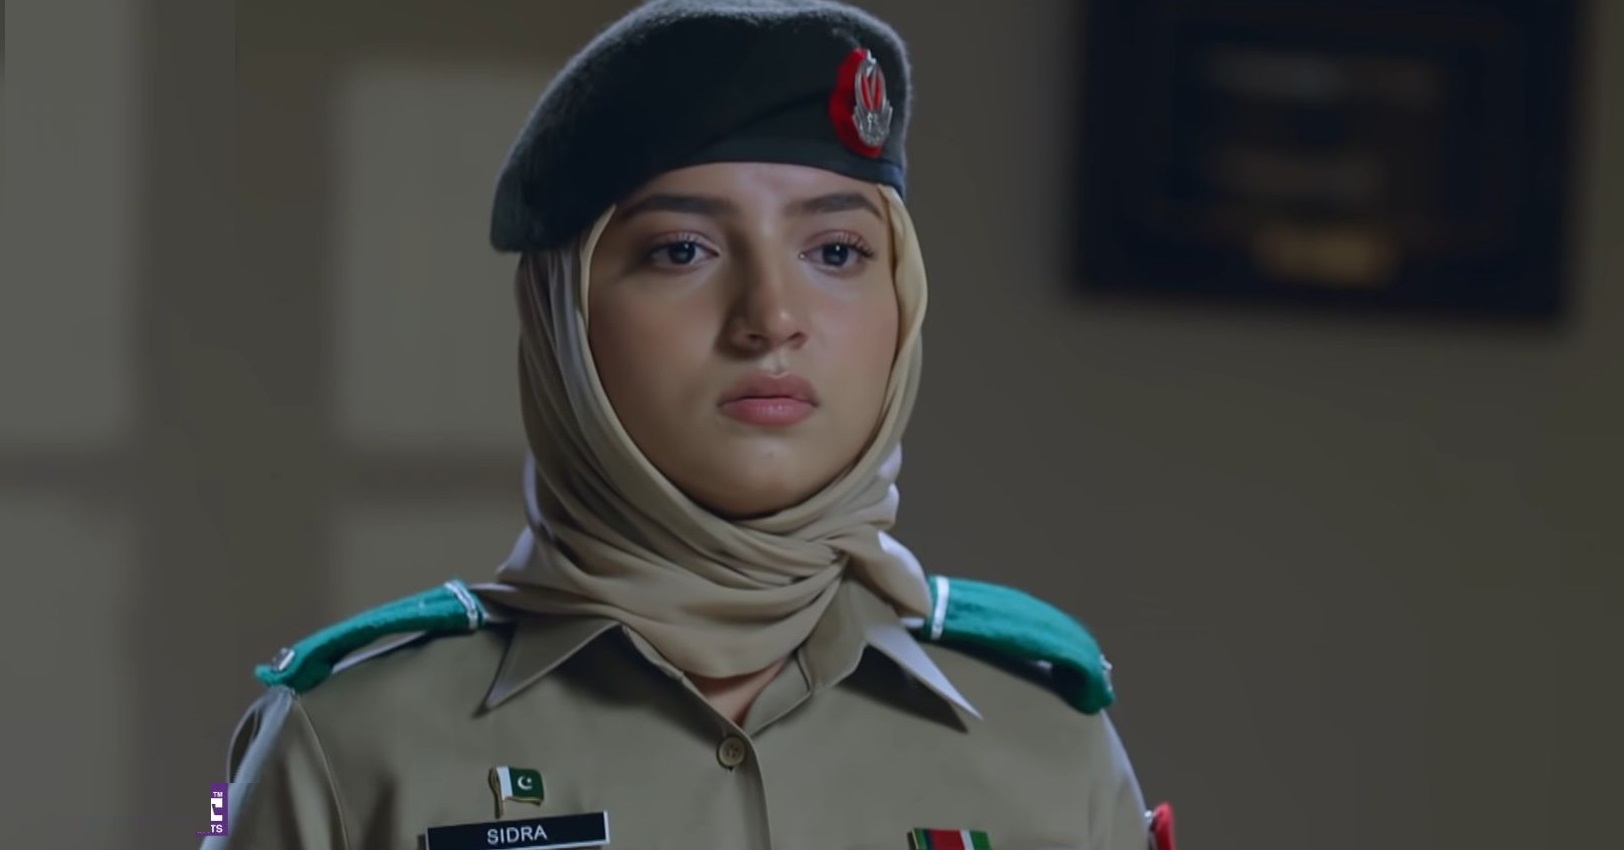 Impressive Performances By Pakistani Actresses In 2022